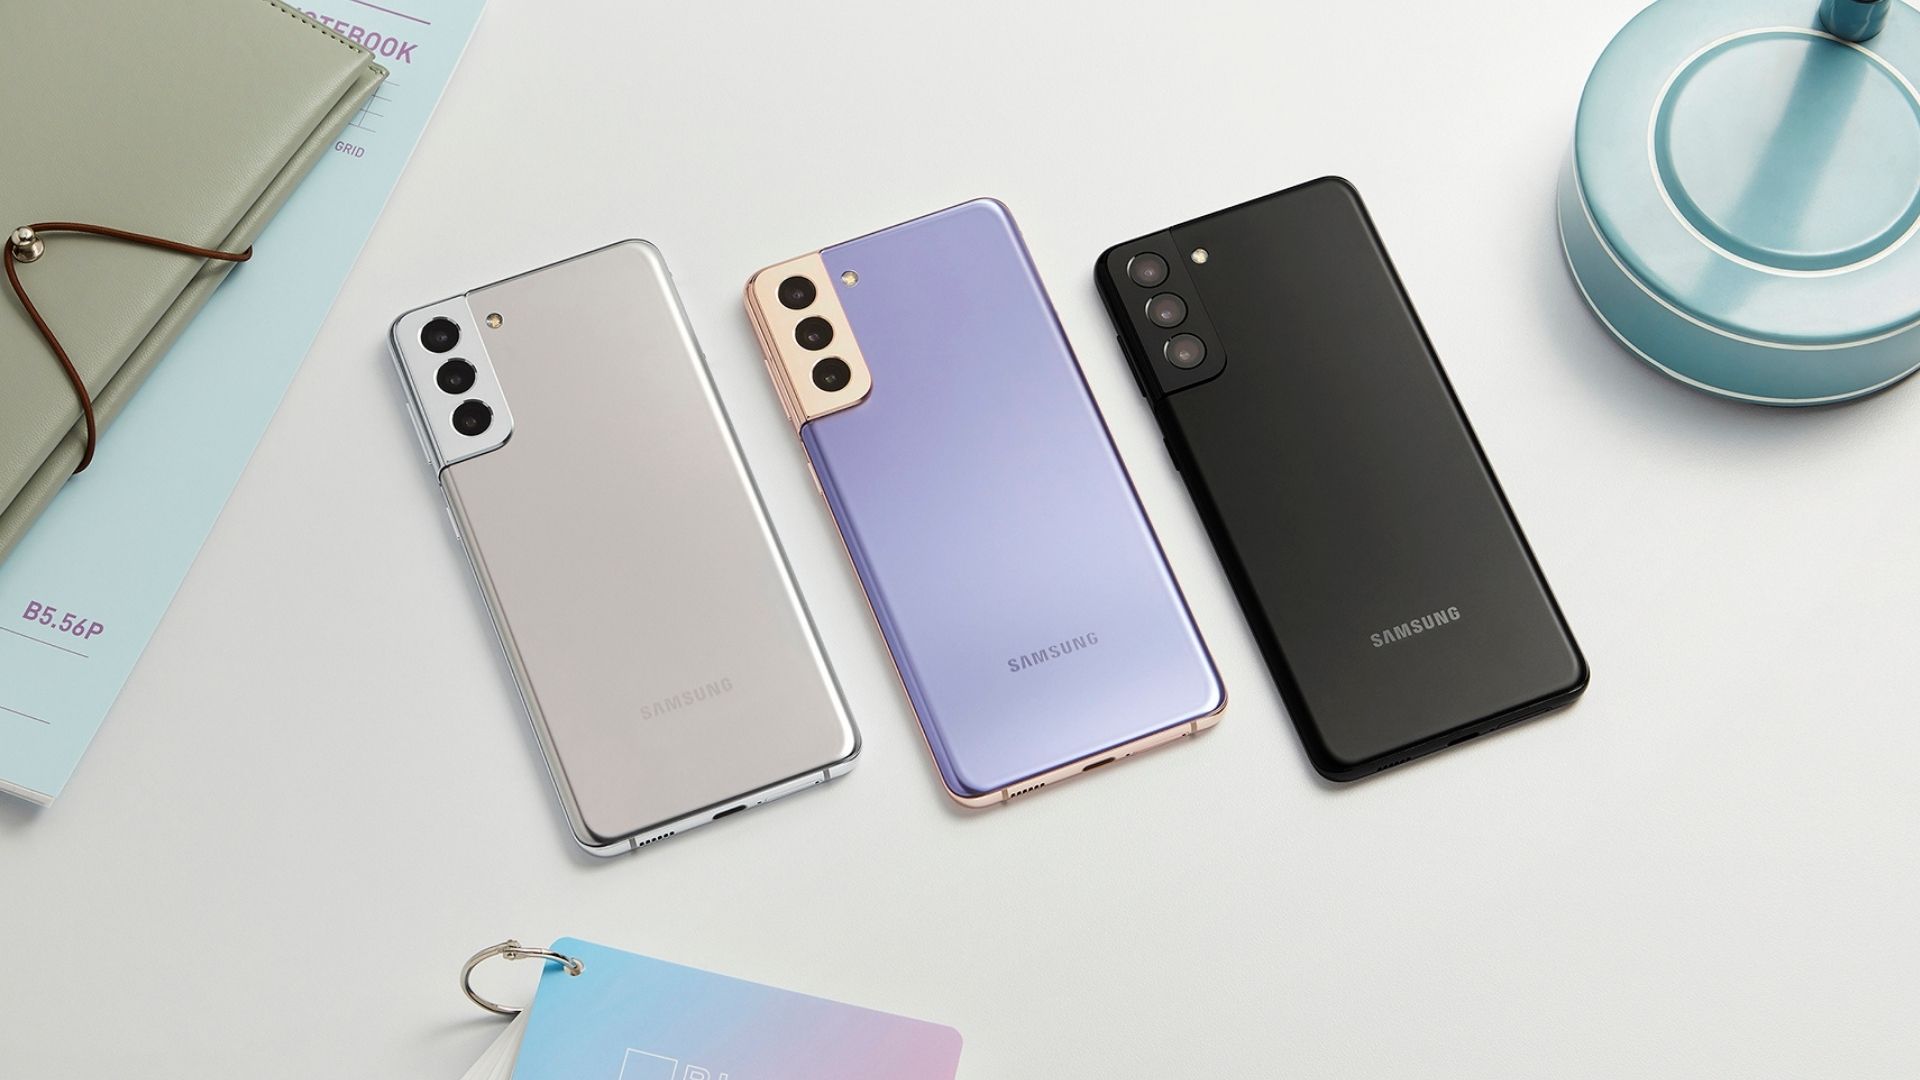 Samsung Galaxy S21 Plus in pearl, purple and black